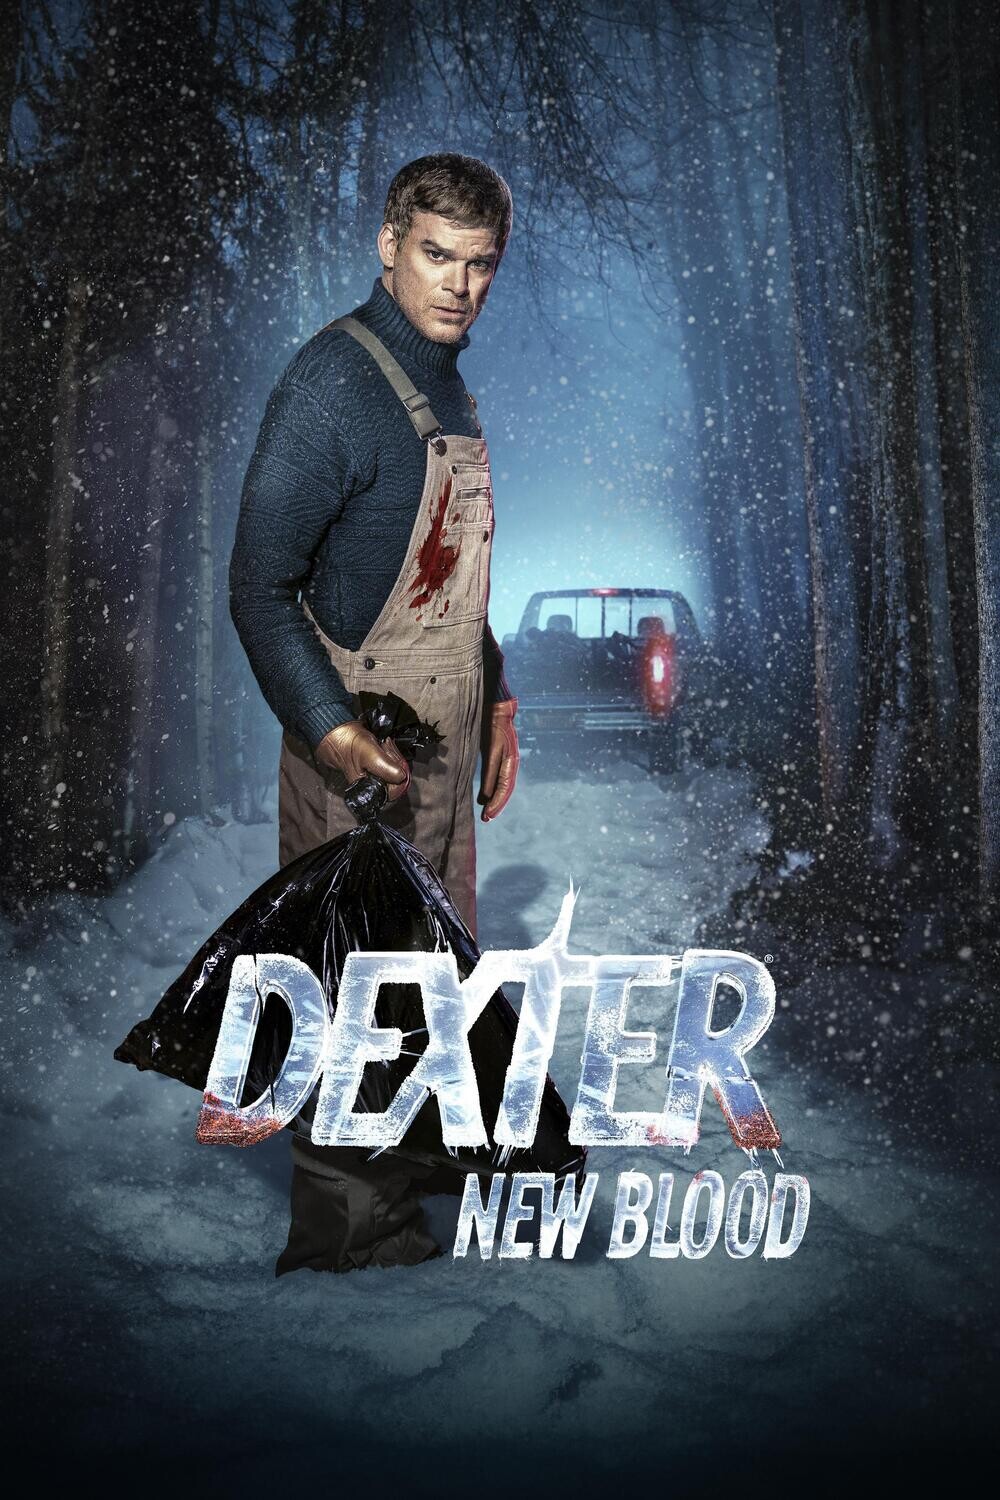 Dexter: New Blood (7 day rental)